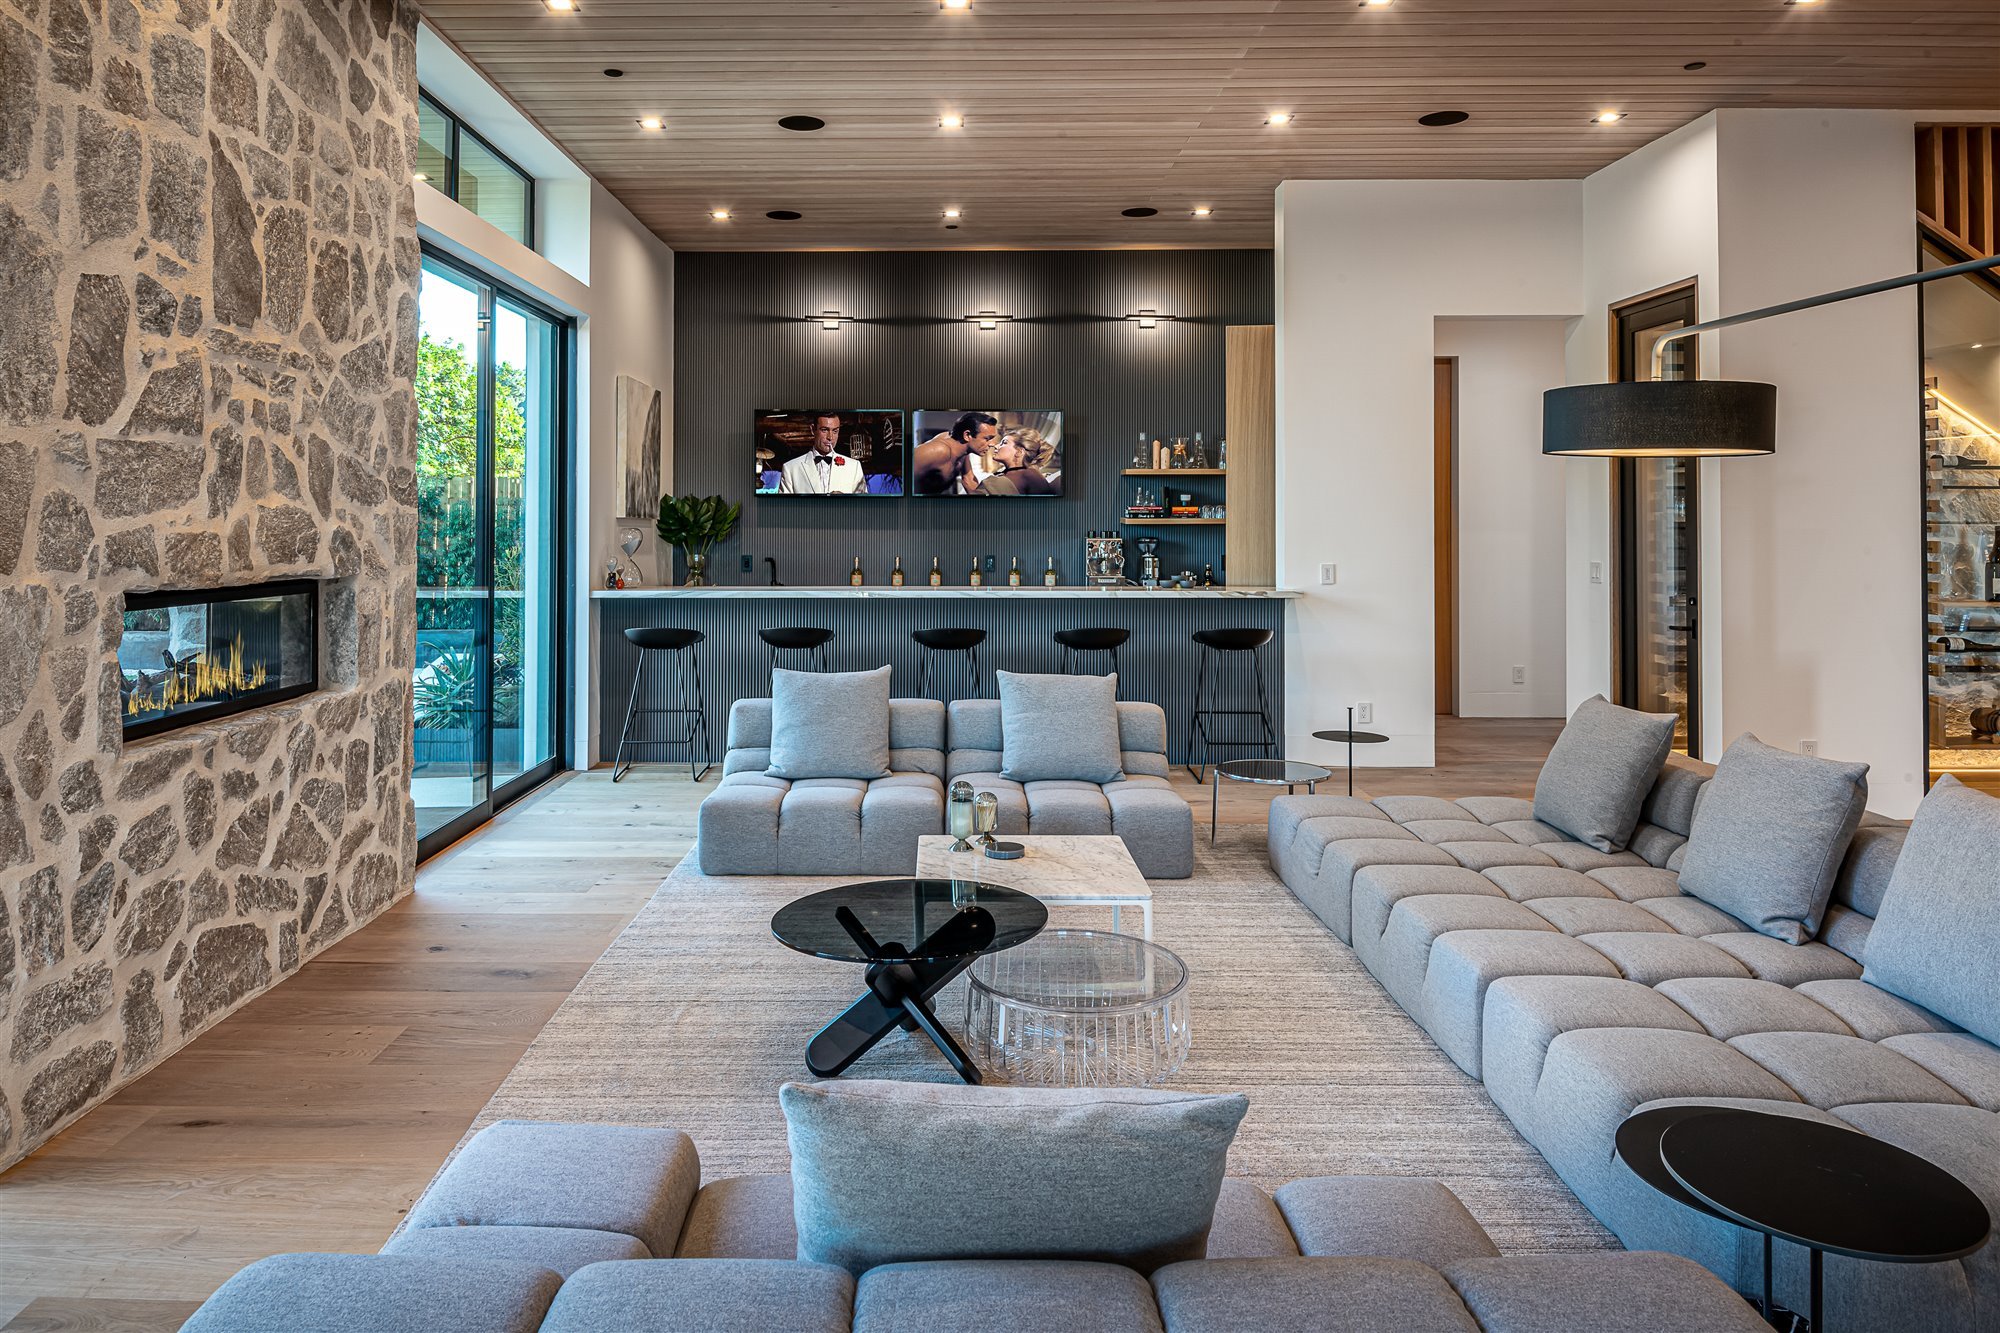 Casa moderna del actor de Modern Family Jesse Tyler Ferguson en Encino los Angeles salon con sofas grises y chimenea